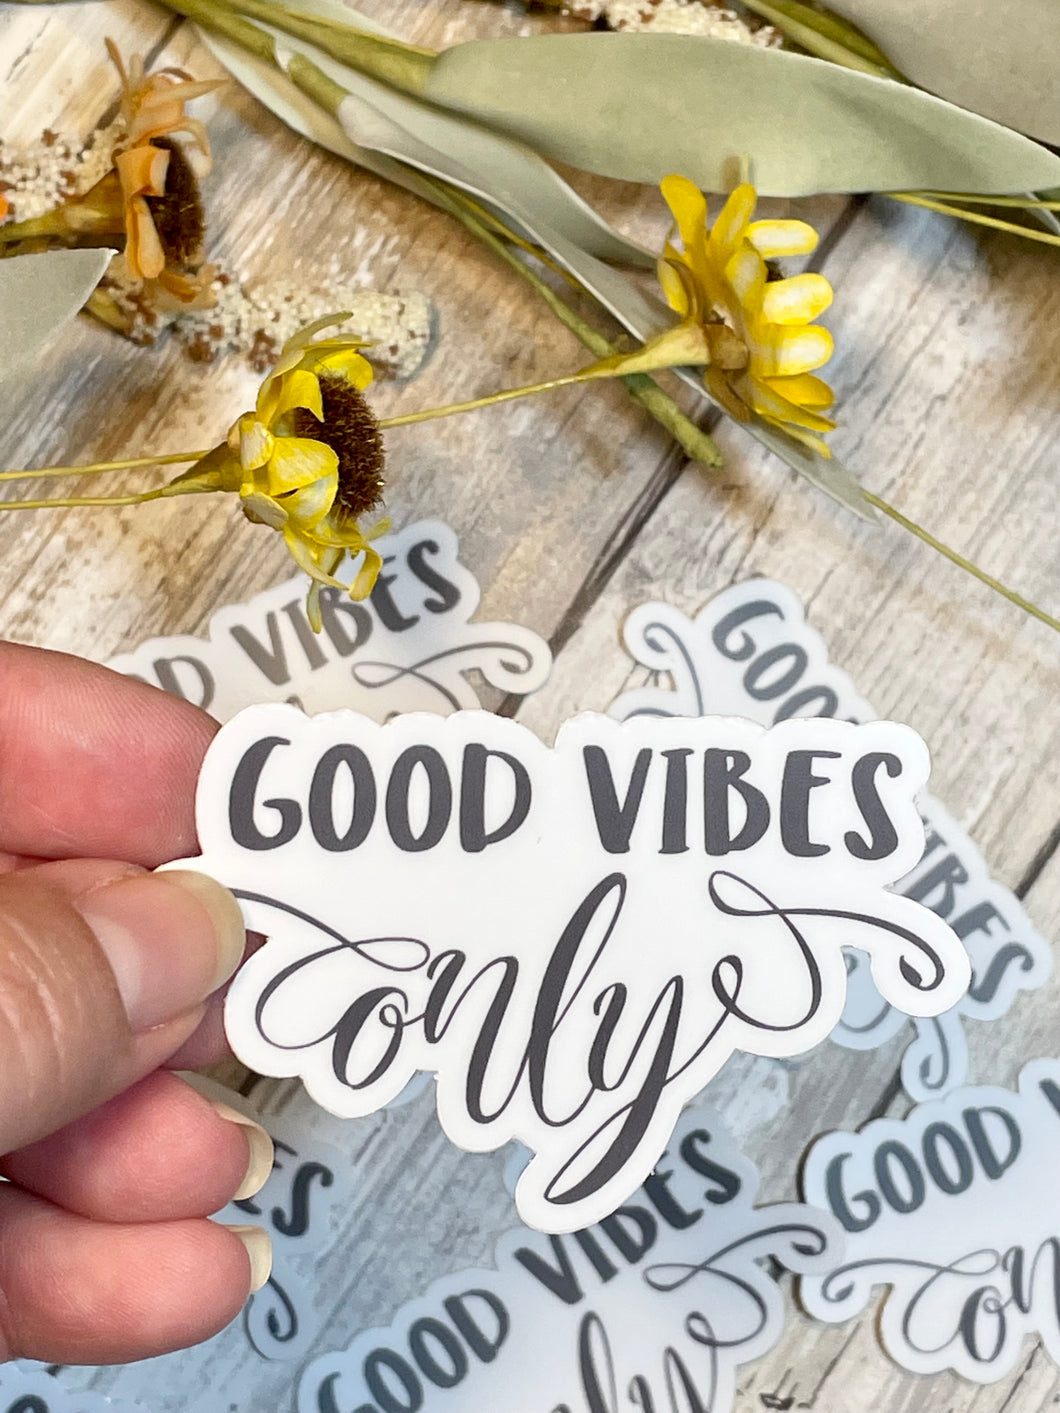 Good Vibes Only Vinyl Sticker, Hydroflask Sticker, Mental Health Decal, Aesthetic Sticker, Kindness Sticker, Positive Decal, Inspirational